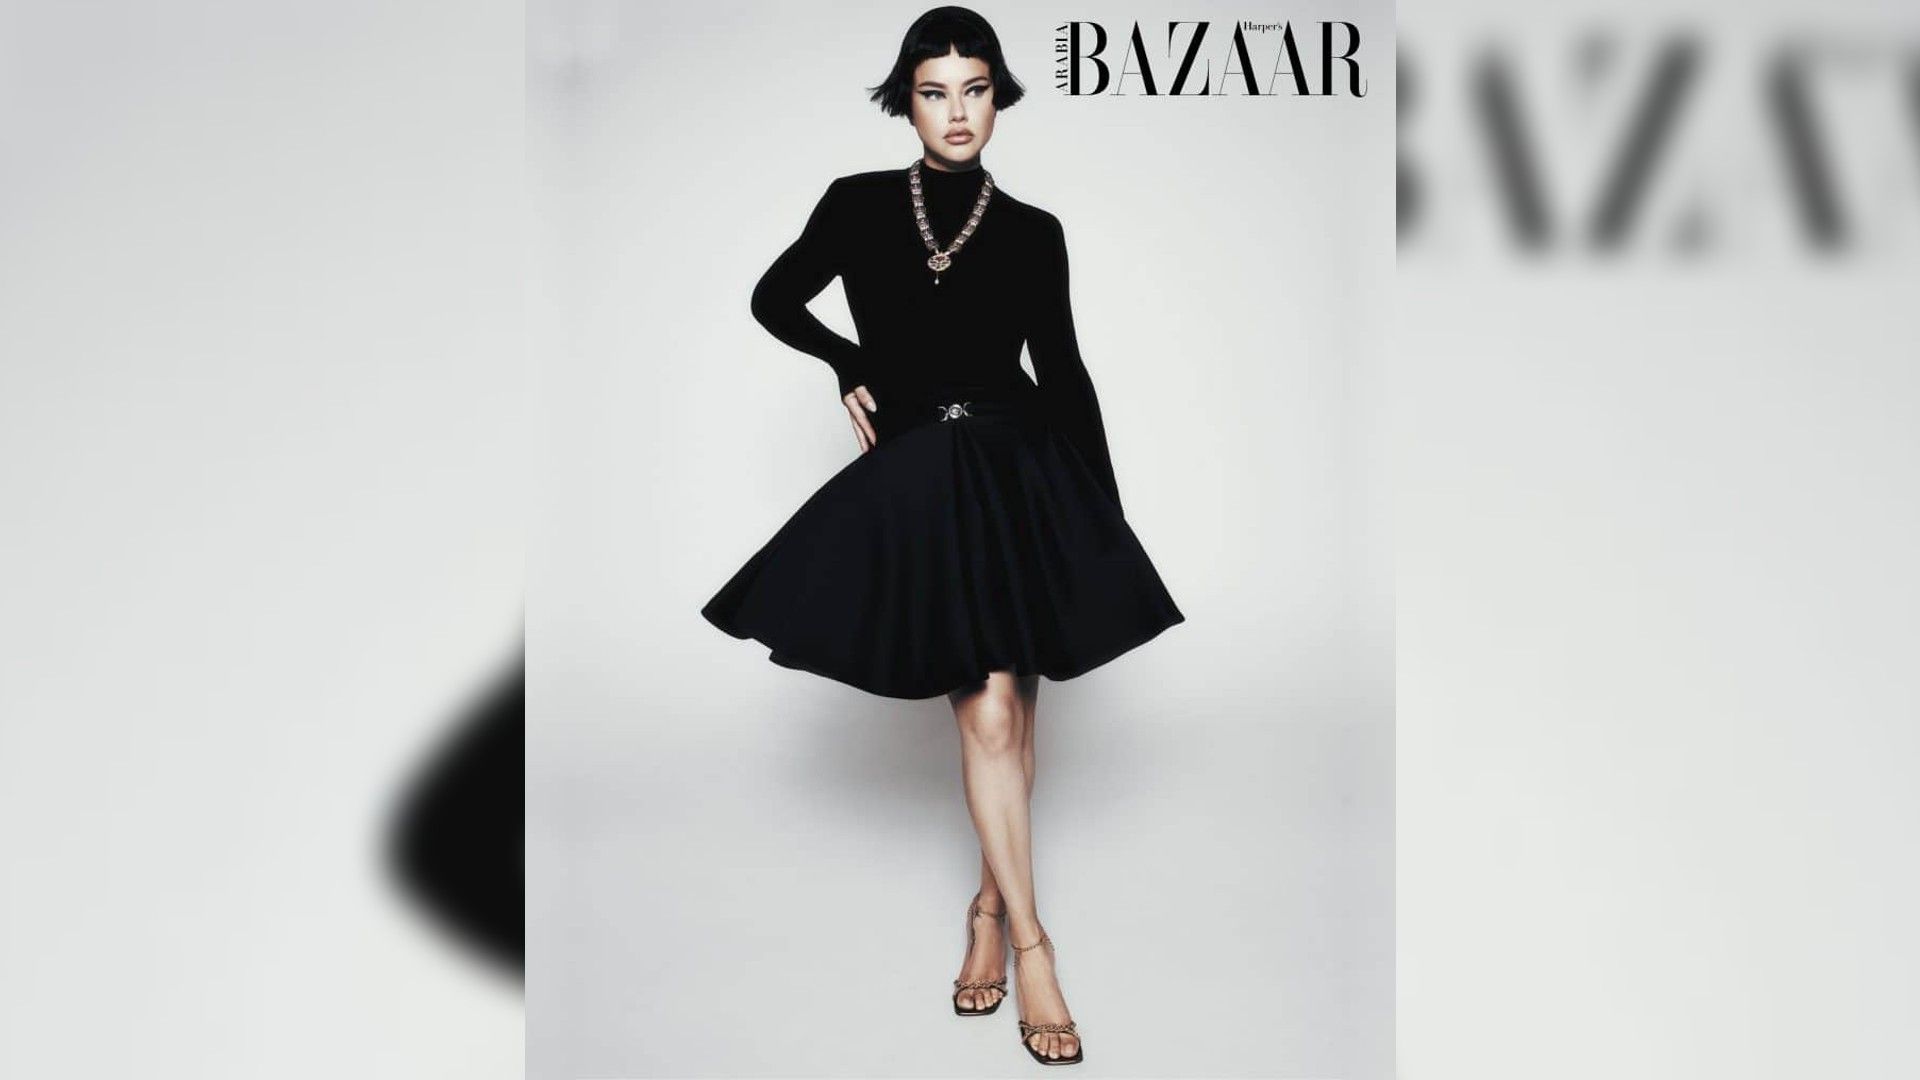 Adriama Lima for Harpers's Bazaar Arabia